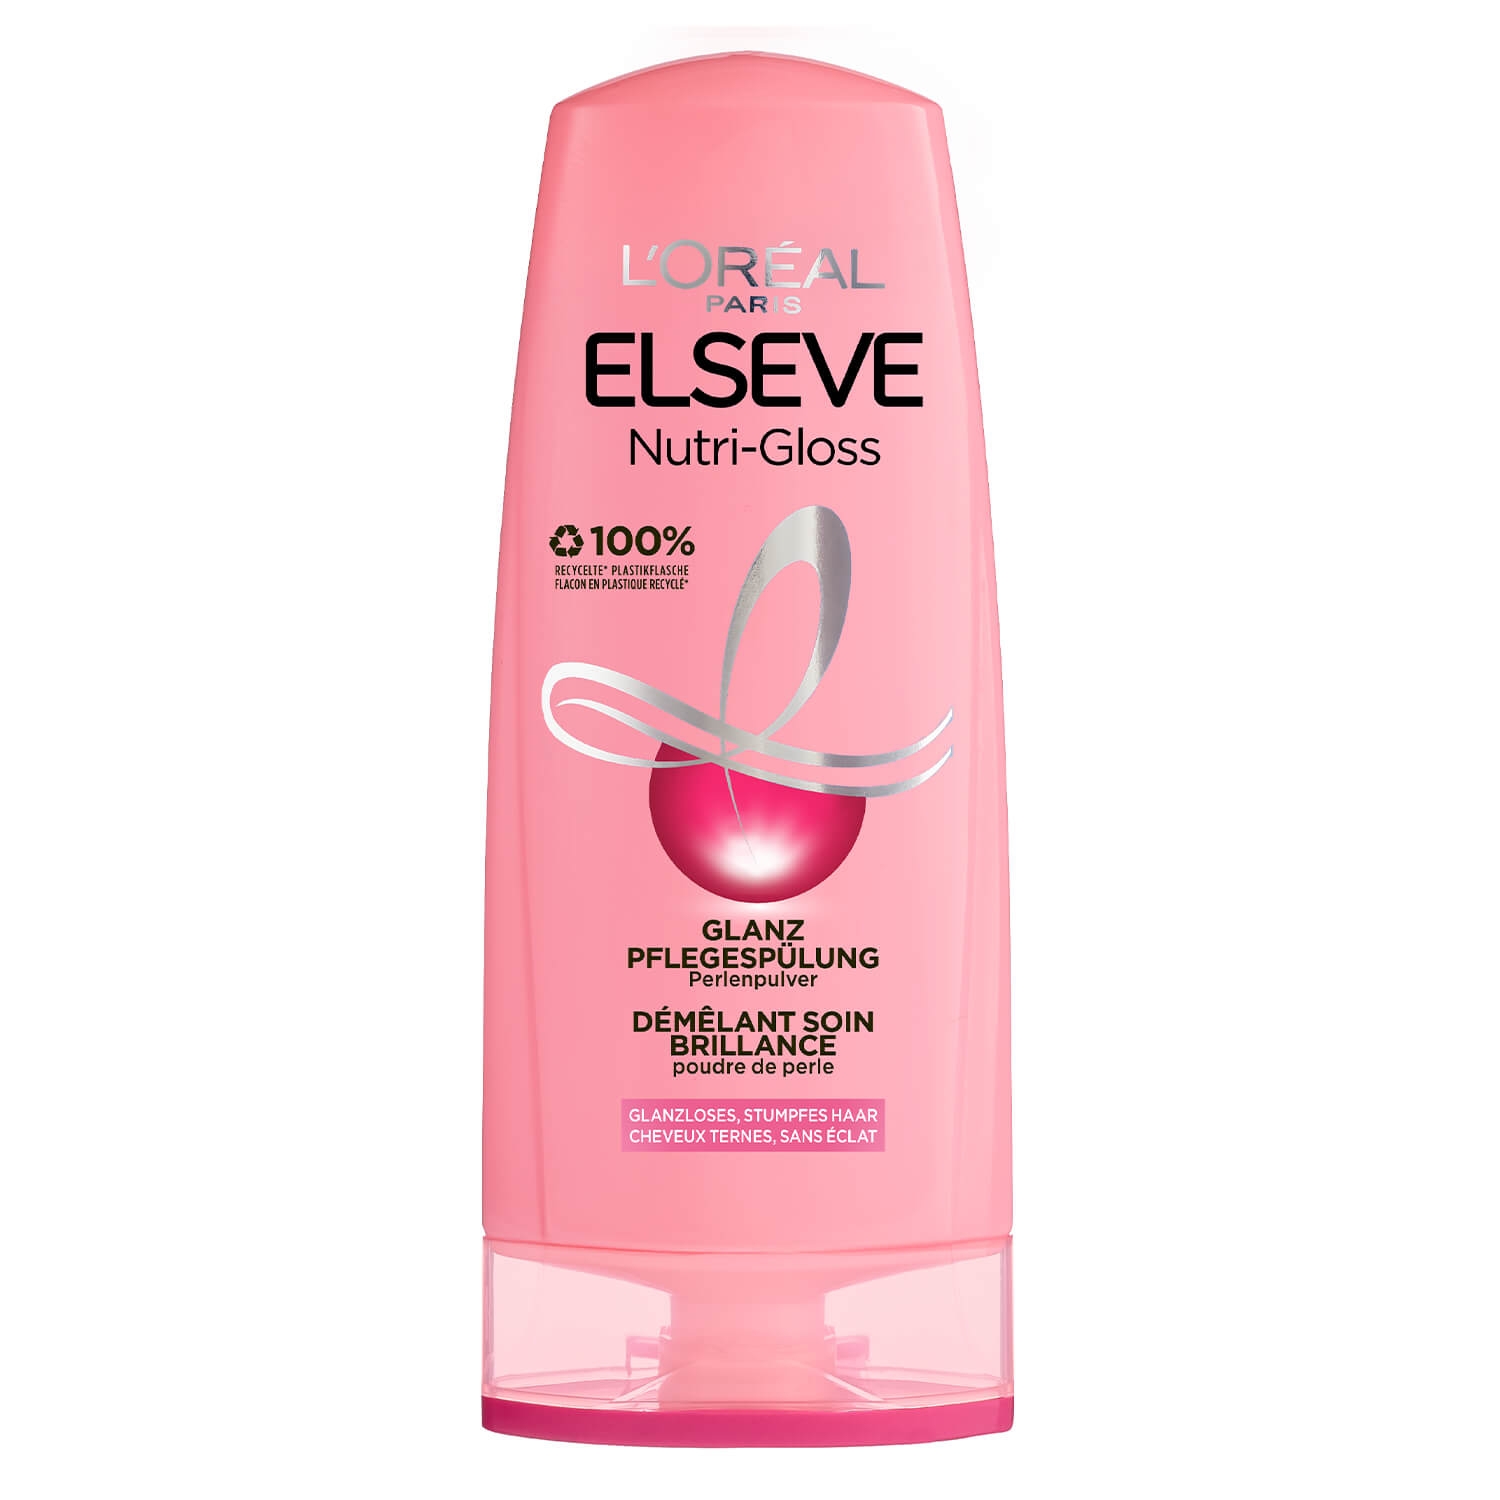 Produktbild von LOréal Elseve Haircare - Nutri-Gloss Glanz-Pflegespülung